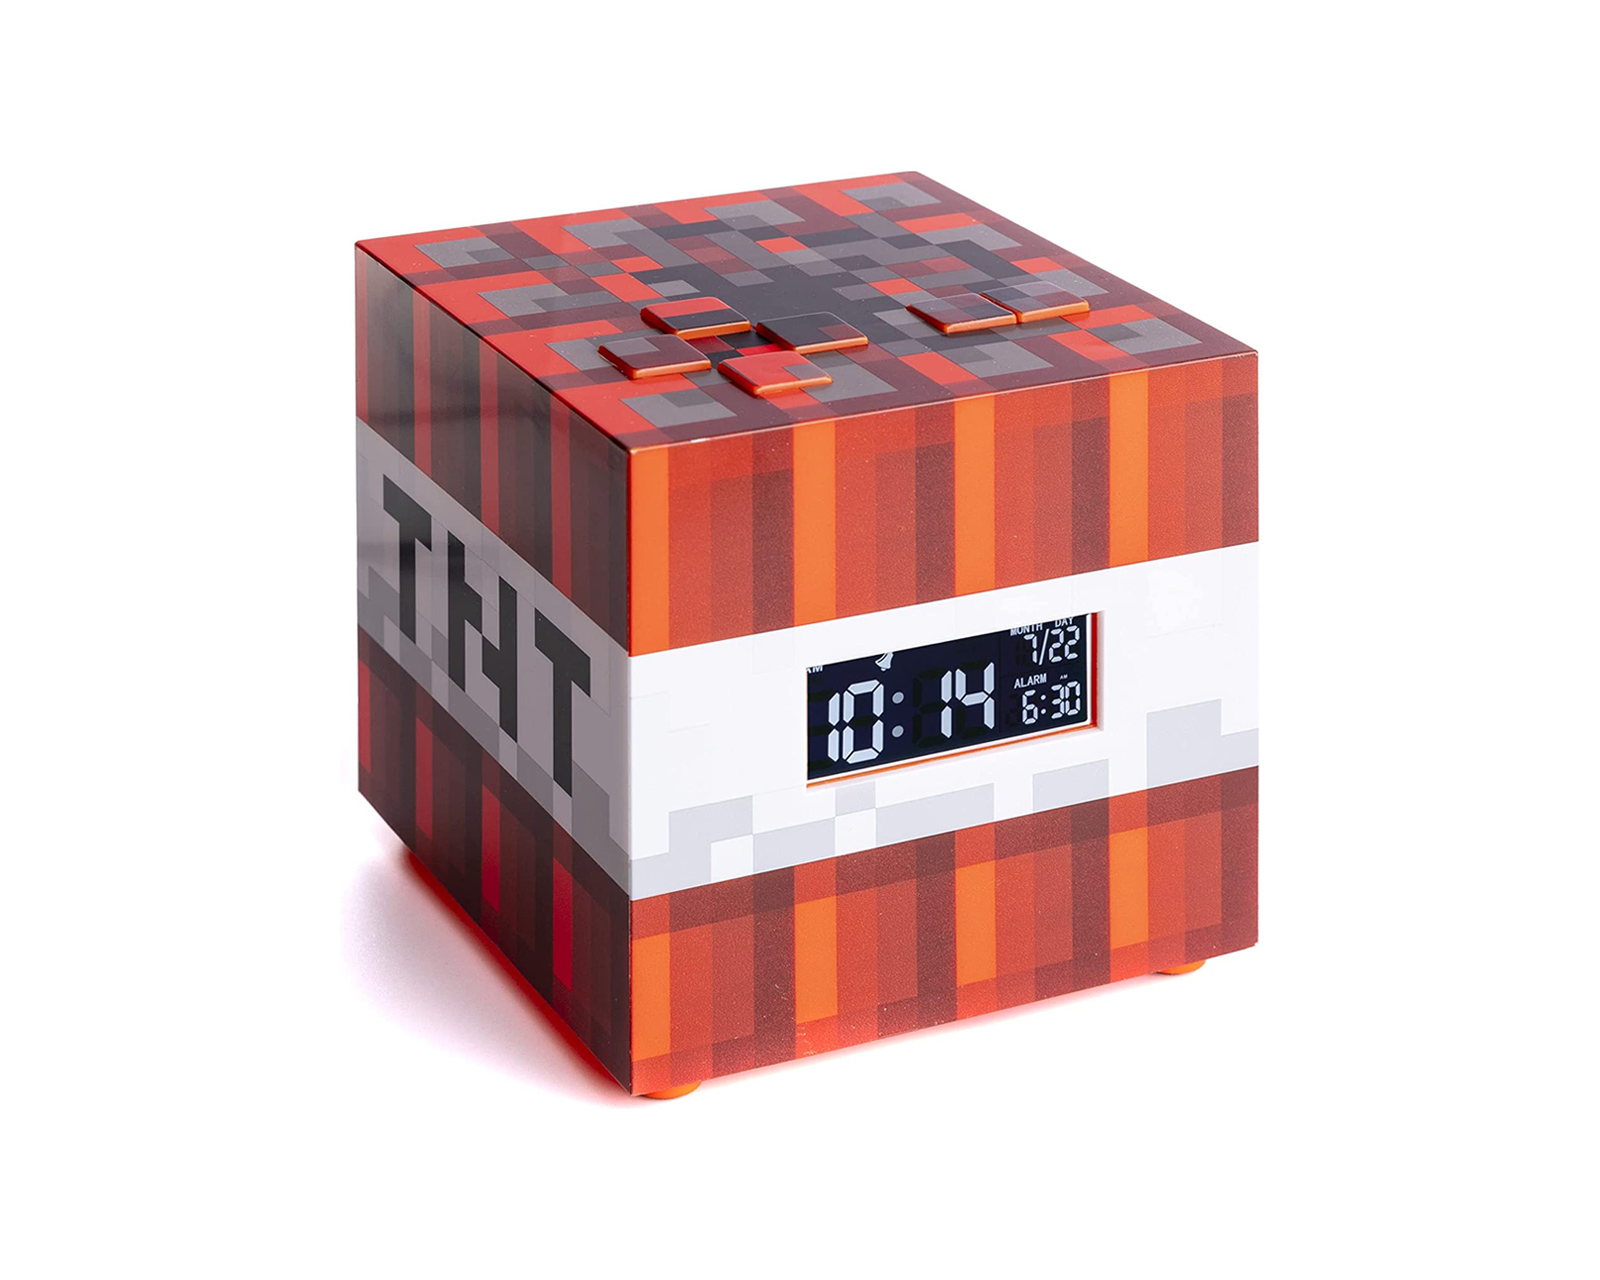 Minecraft Alarm Clock Plays Official Minecraft Music & Mood Light Function  NEW